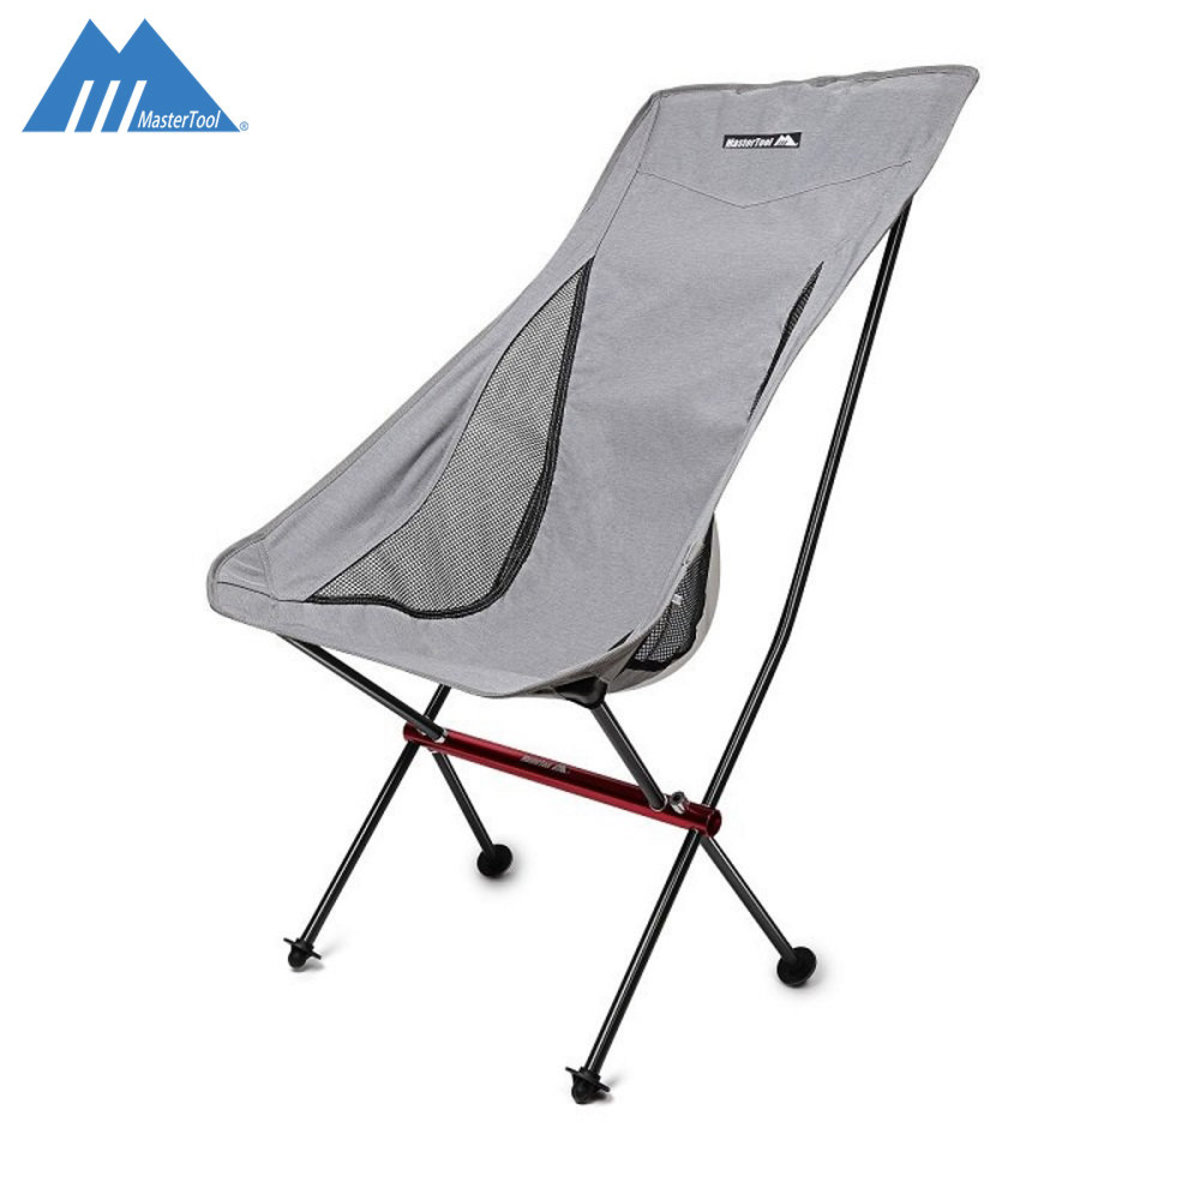 MasterTool - Lightweight Folding High Back Camping Outdoor Chair with Headrest (grey))